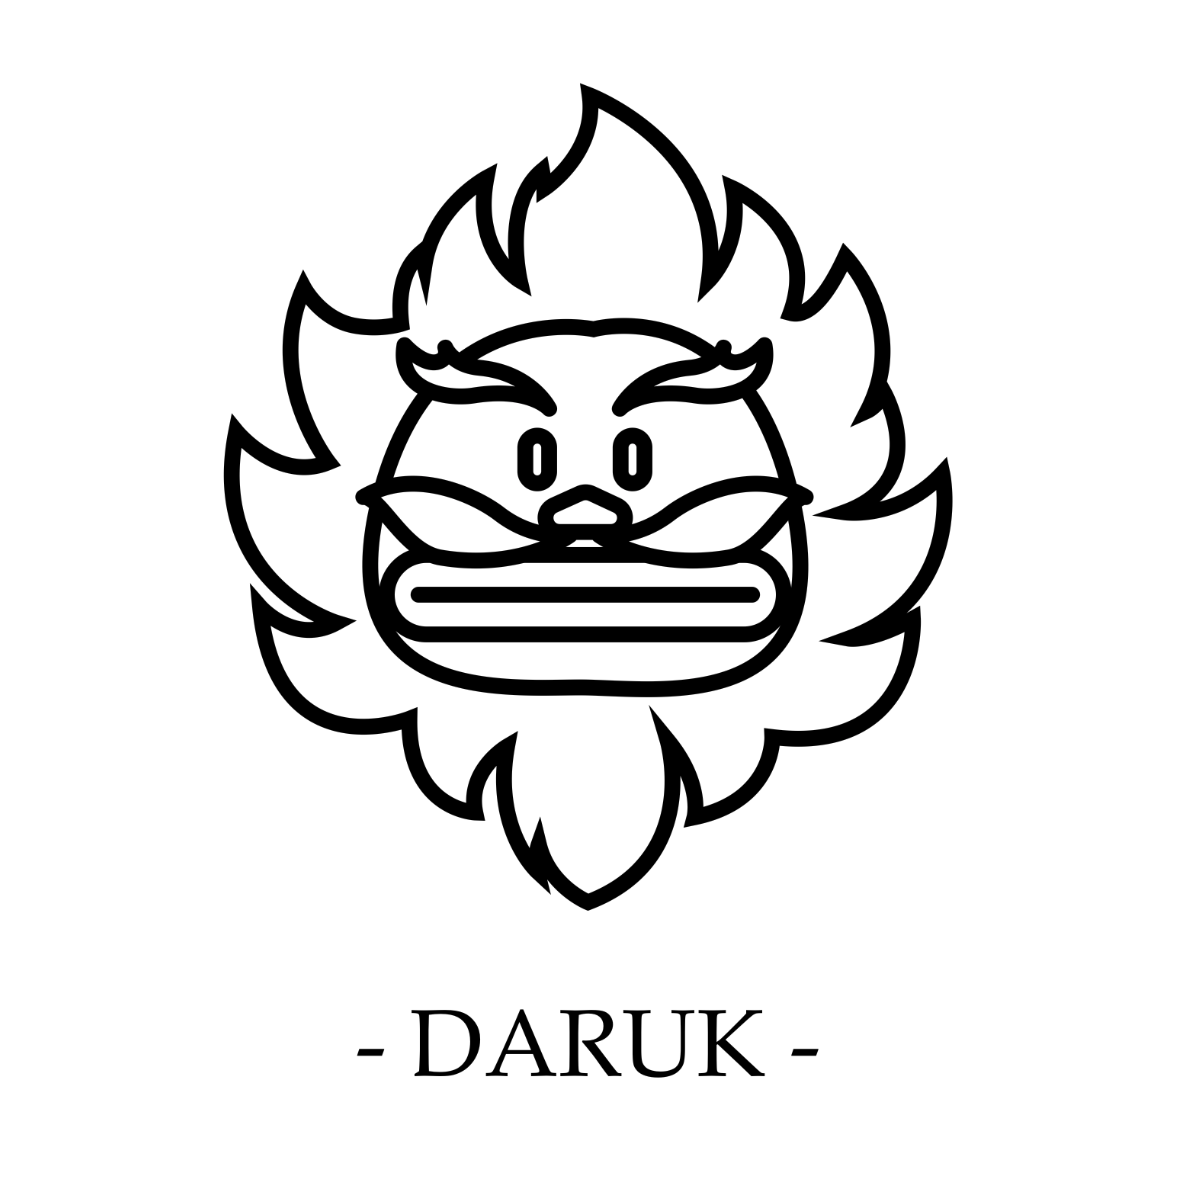 Daruk